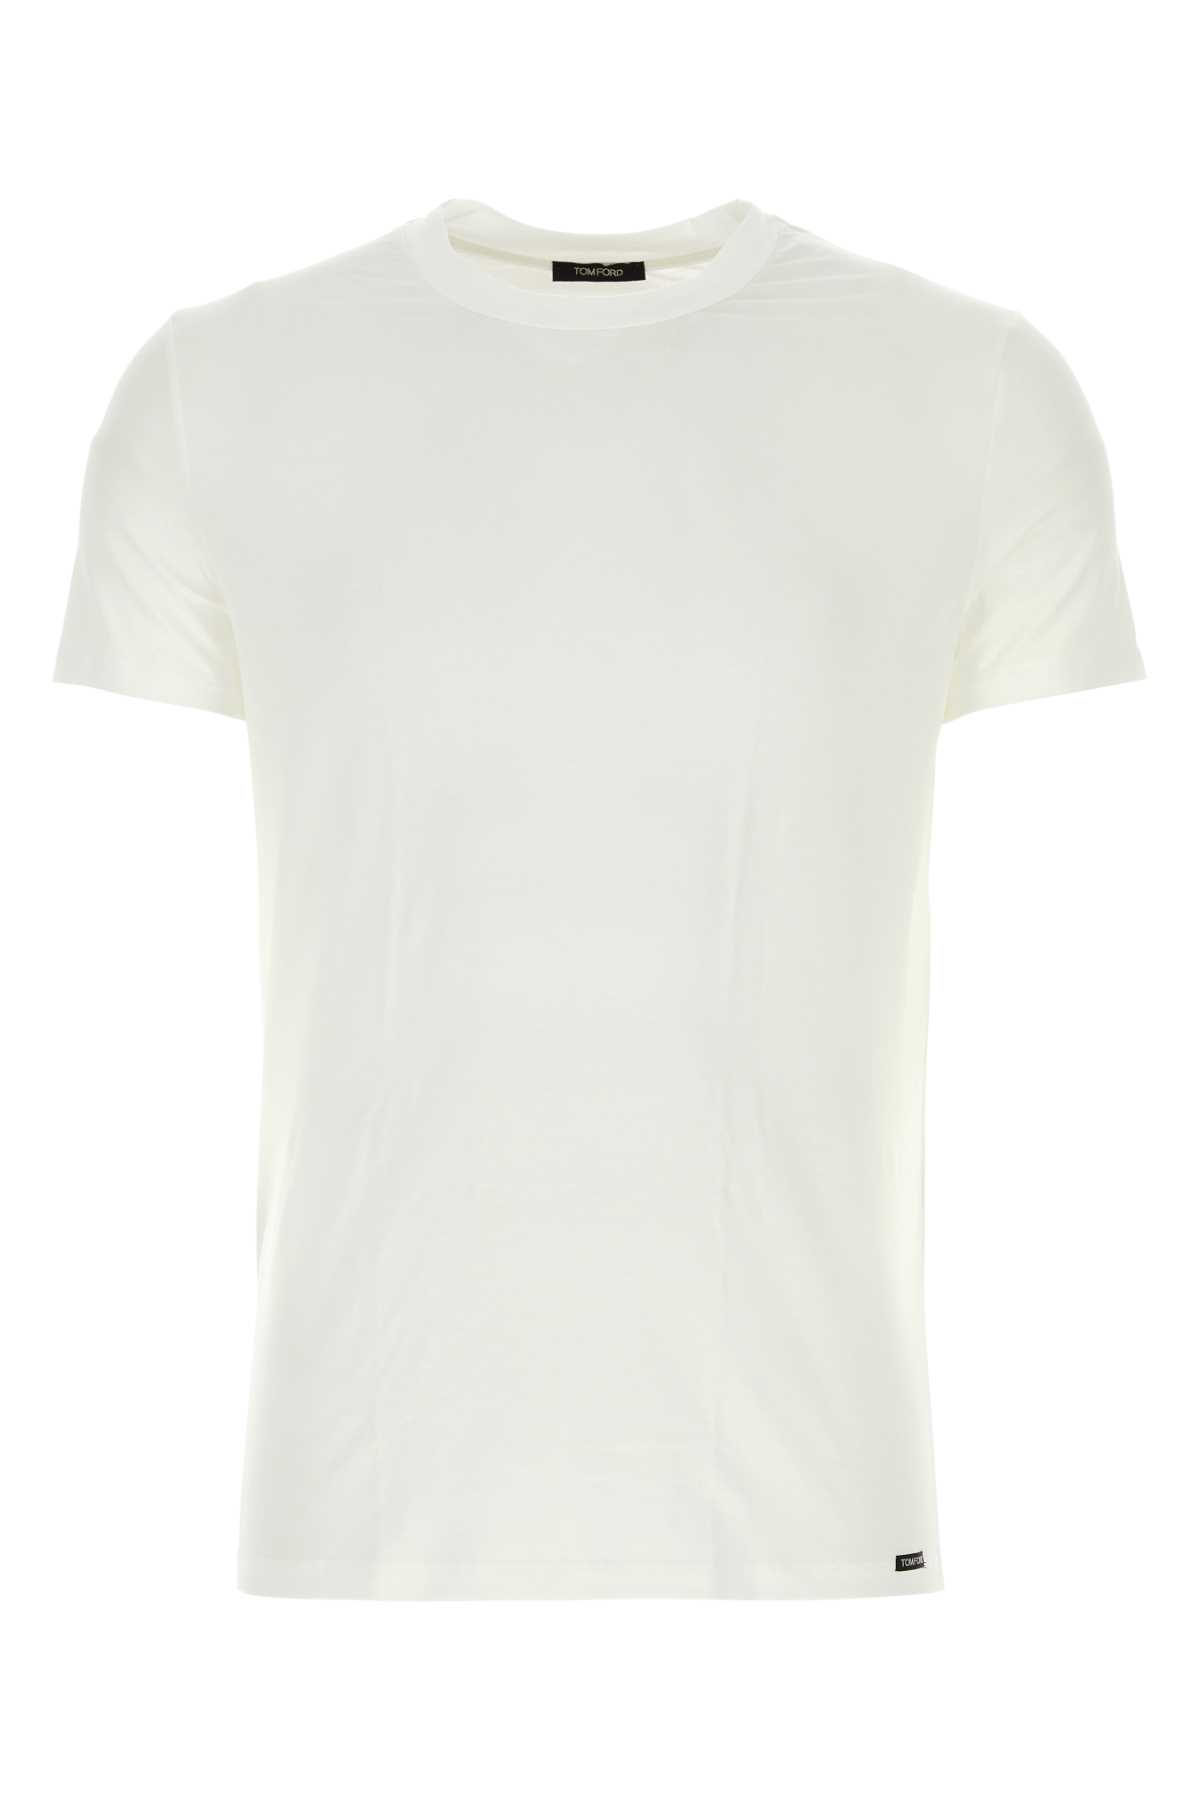 Shop Tom Ford White Stretch Cotton Blend T-shirt